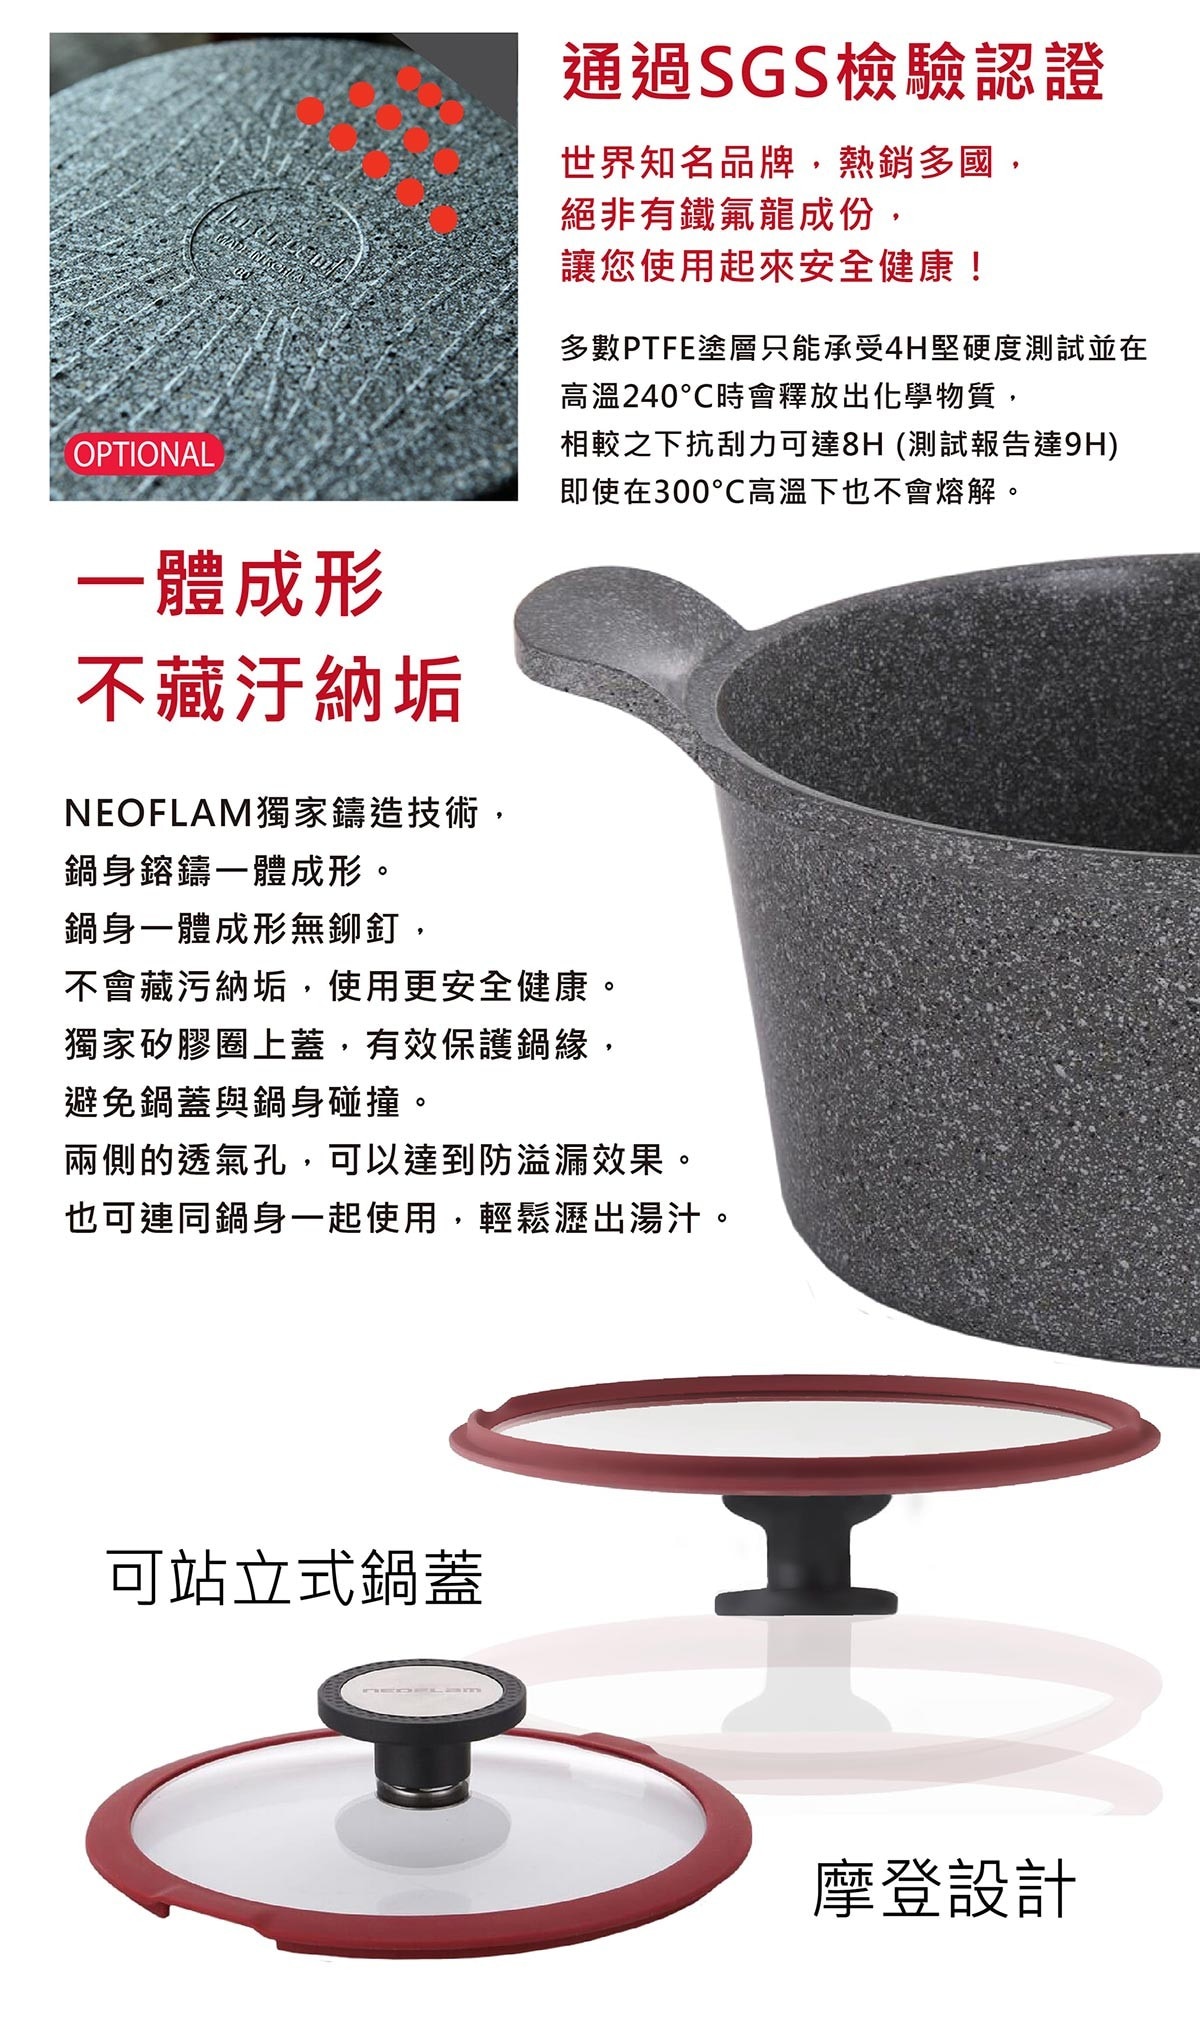 Neoflam Pote 鑄造雙耳湯鍋，獨家鑄造技術，鍋身鎔鑄一體成形無鉚釘，不會藏污納垢，通過SGS檢驗認證，使用更安全健康。